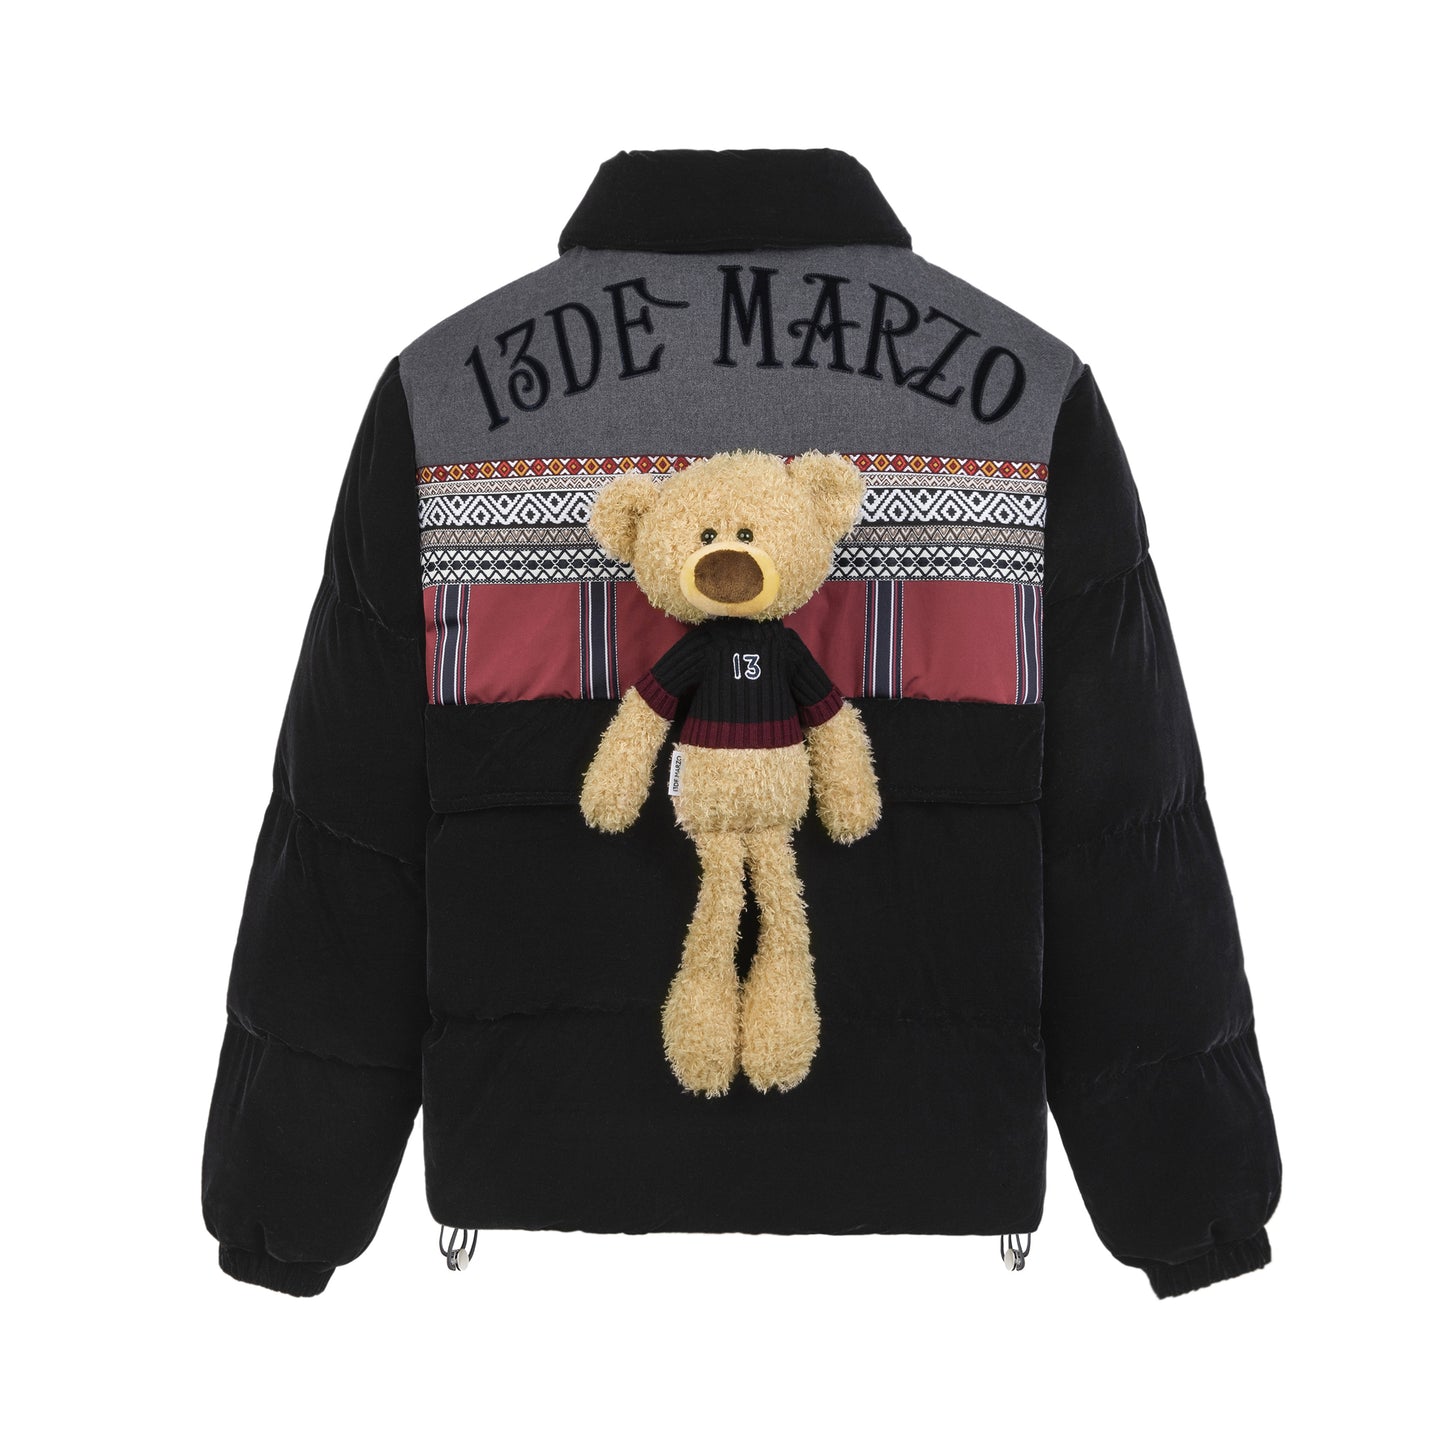 13DE MARZO Bear Exotic Down Jacket